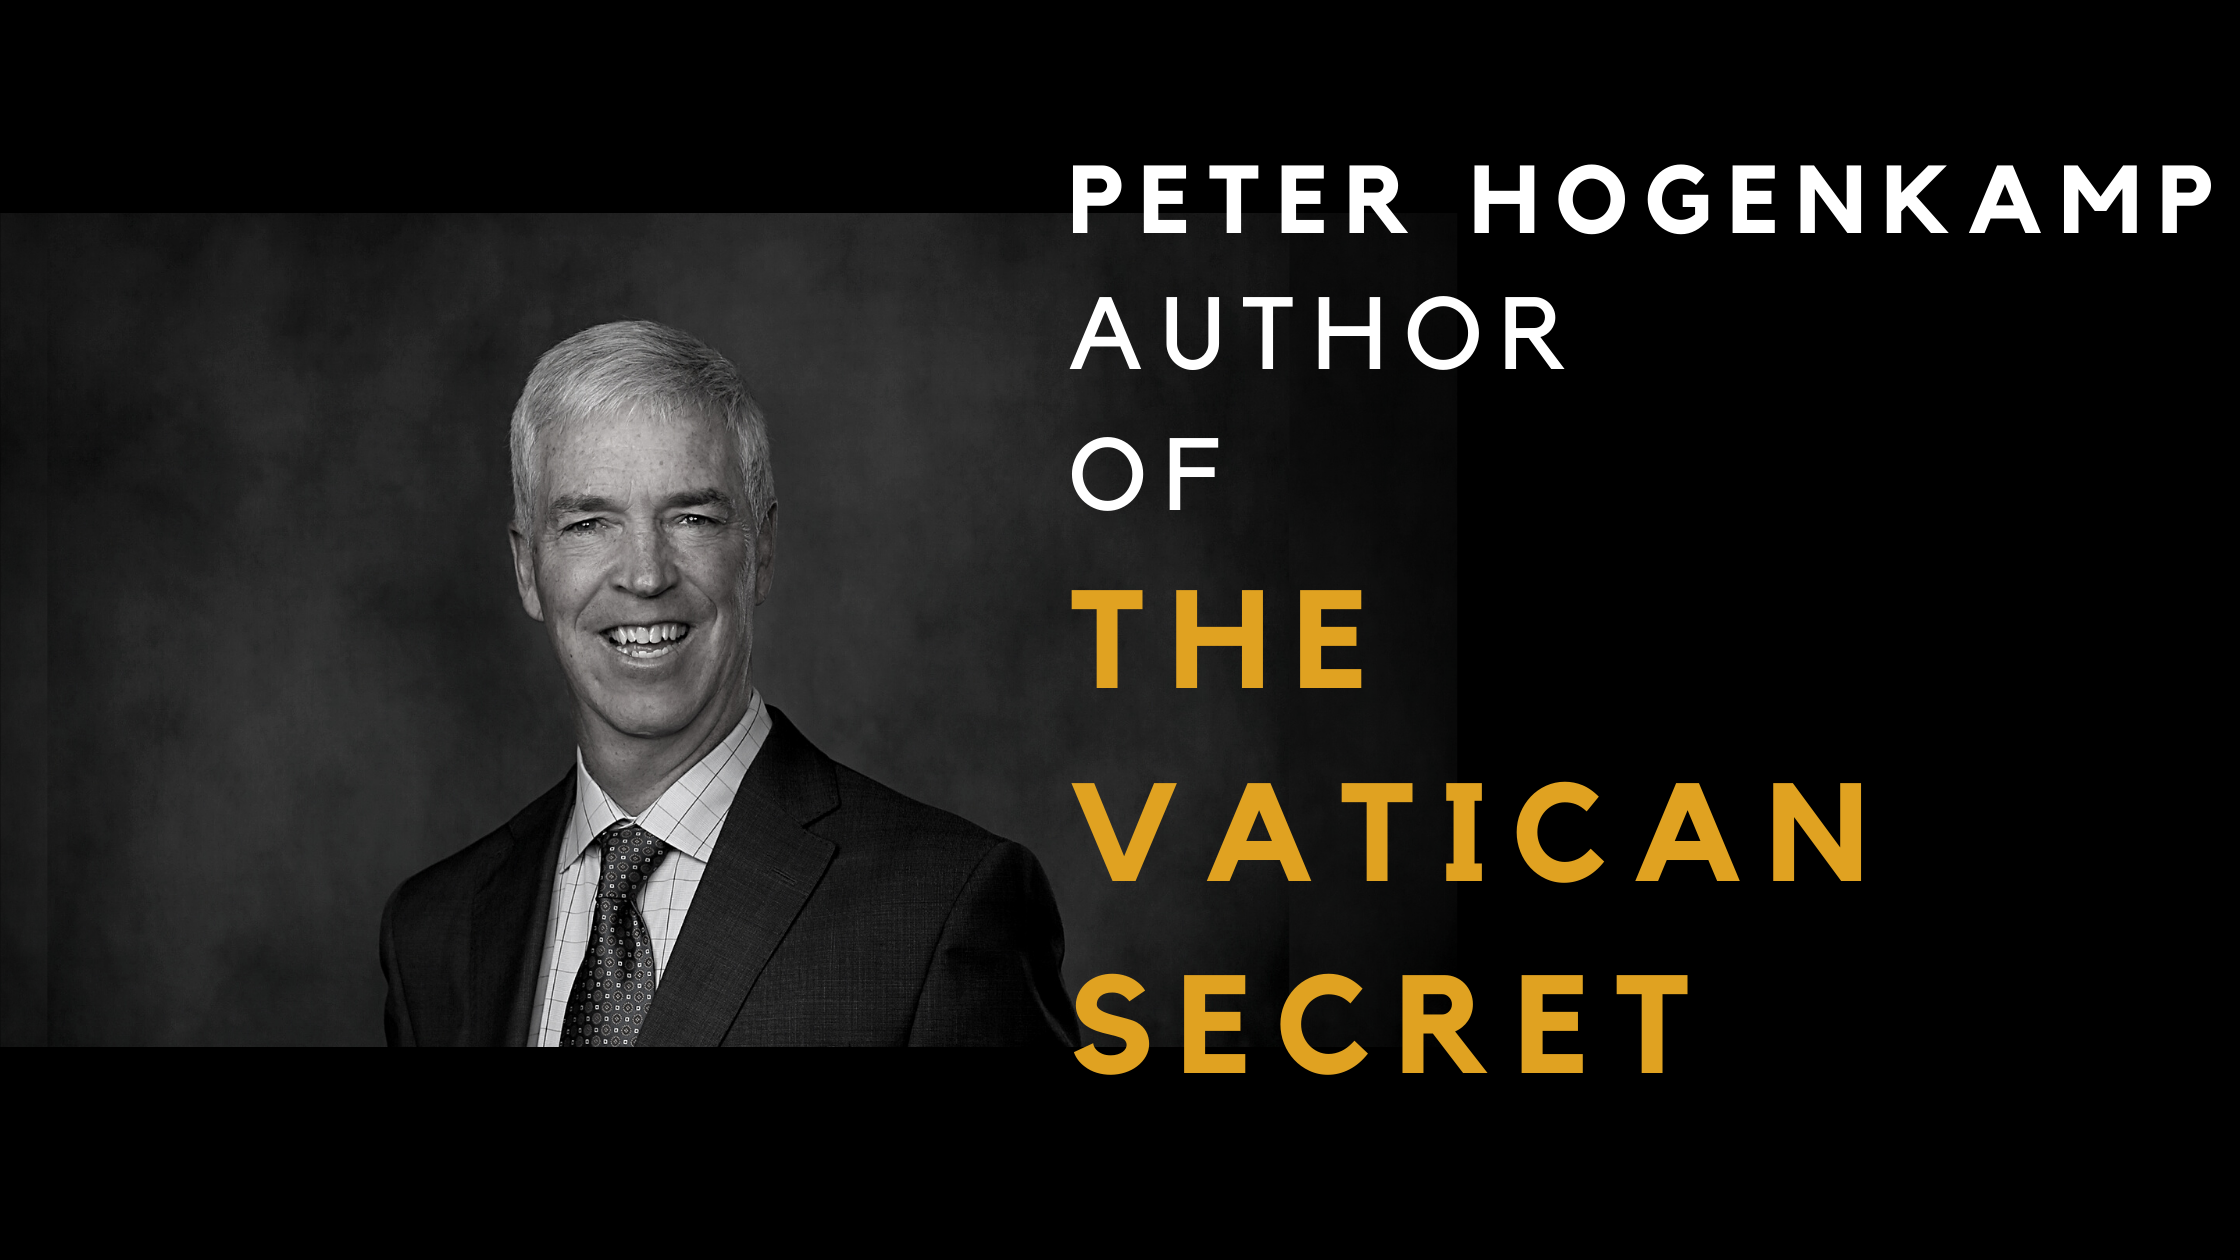 The Vatican Secret – Action packed psychological thriller!